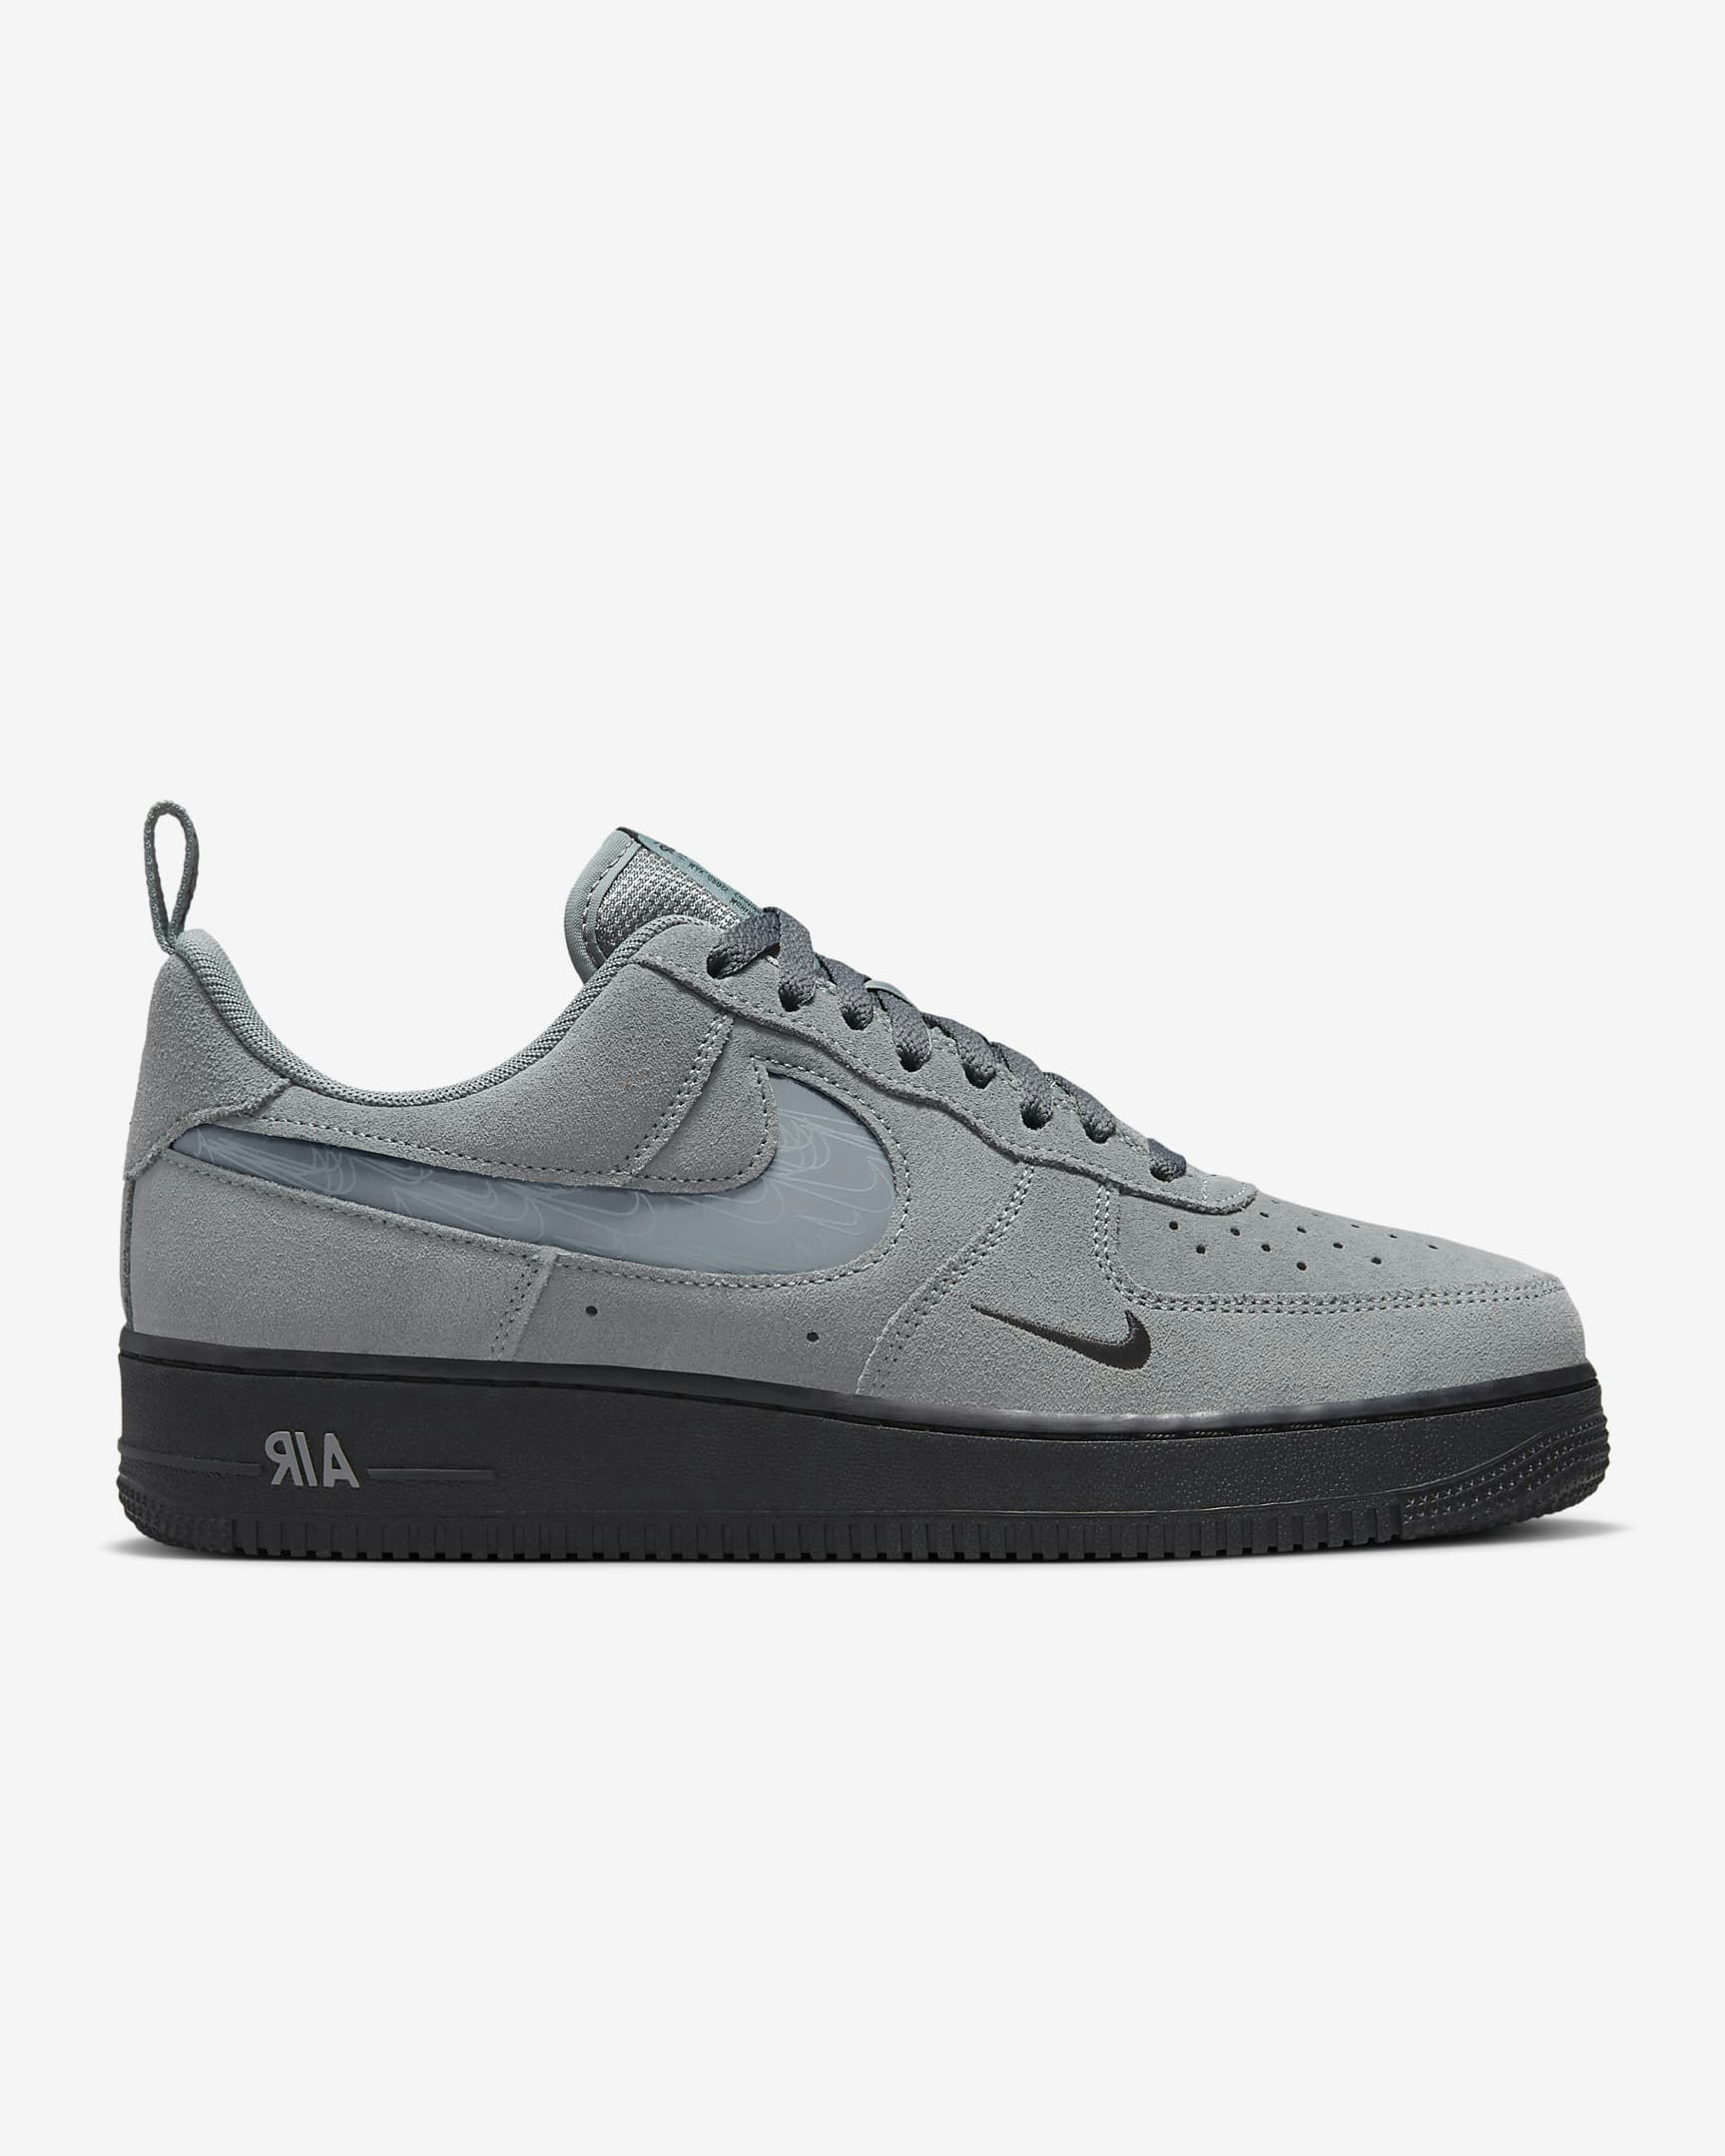 Nike Air Force 1 Low "Cool Grey" 